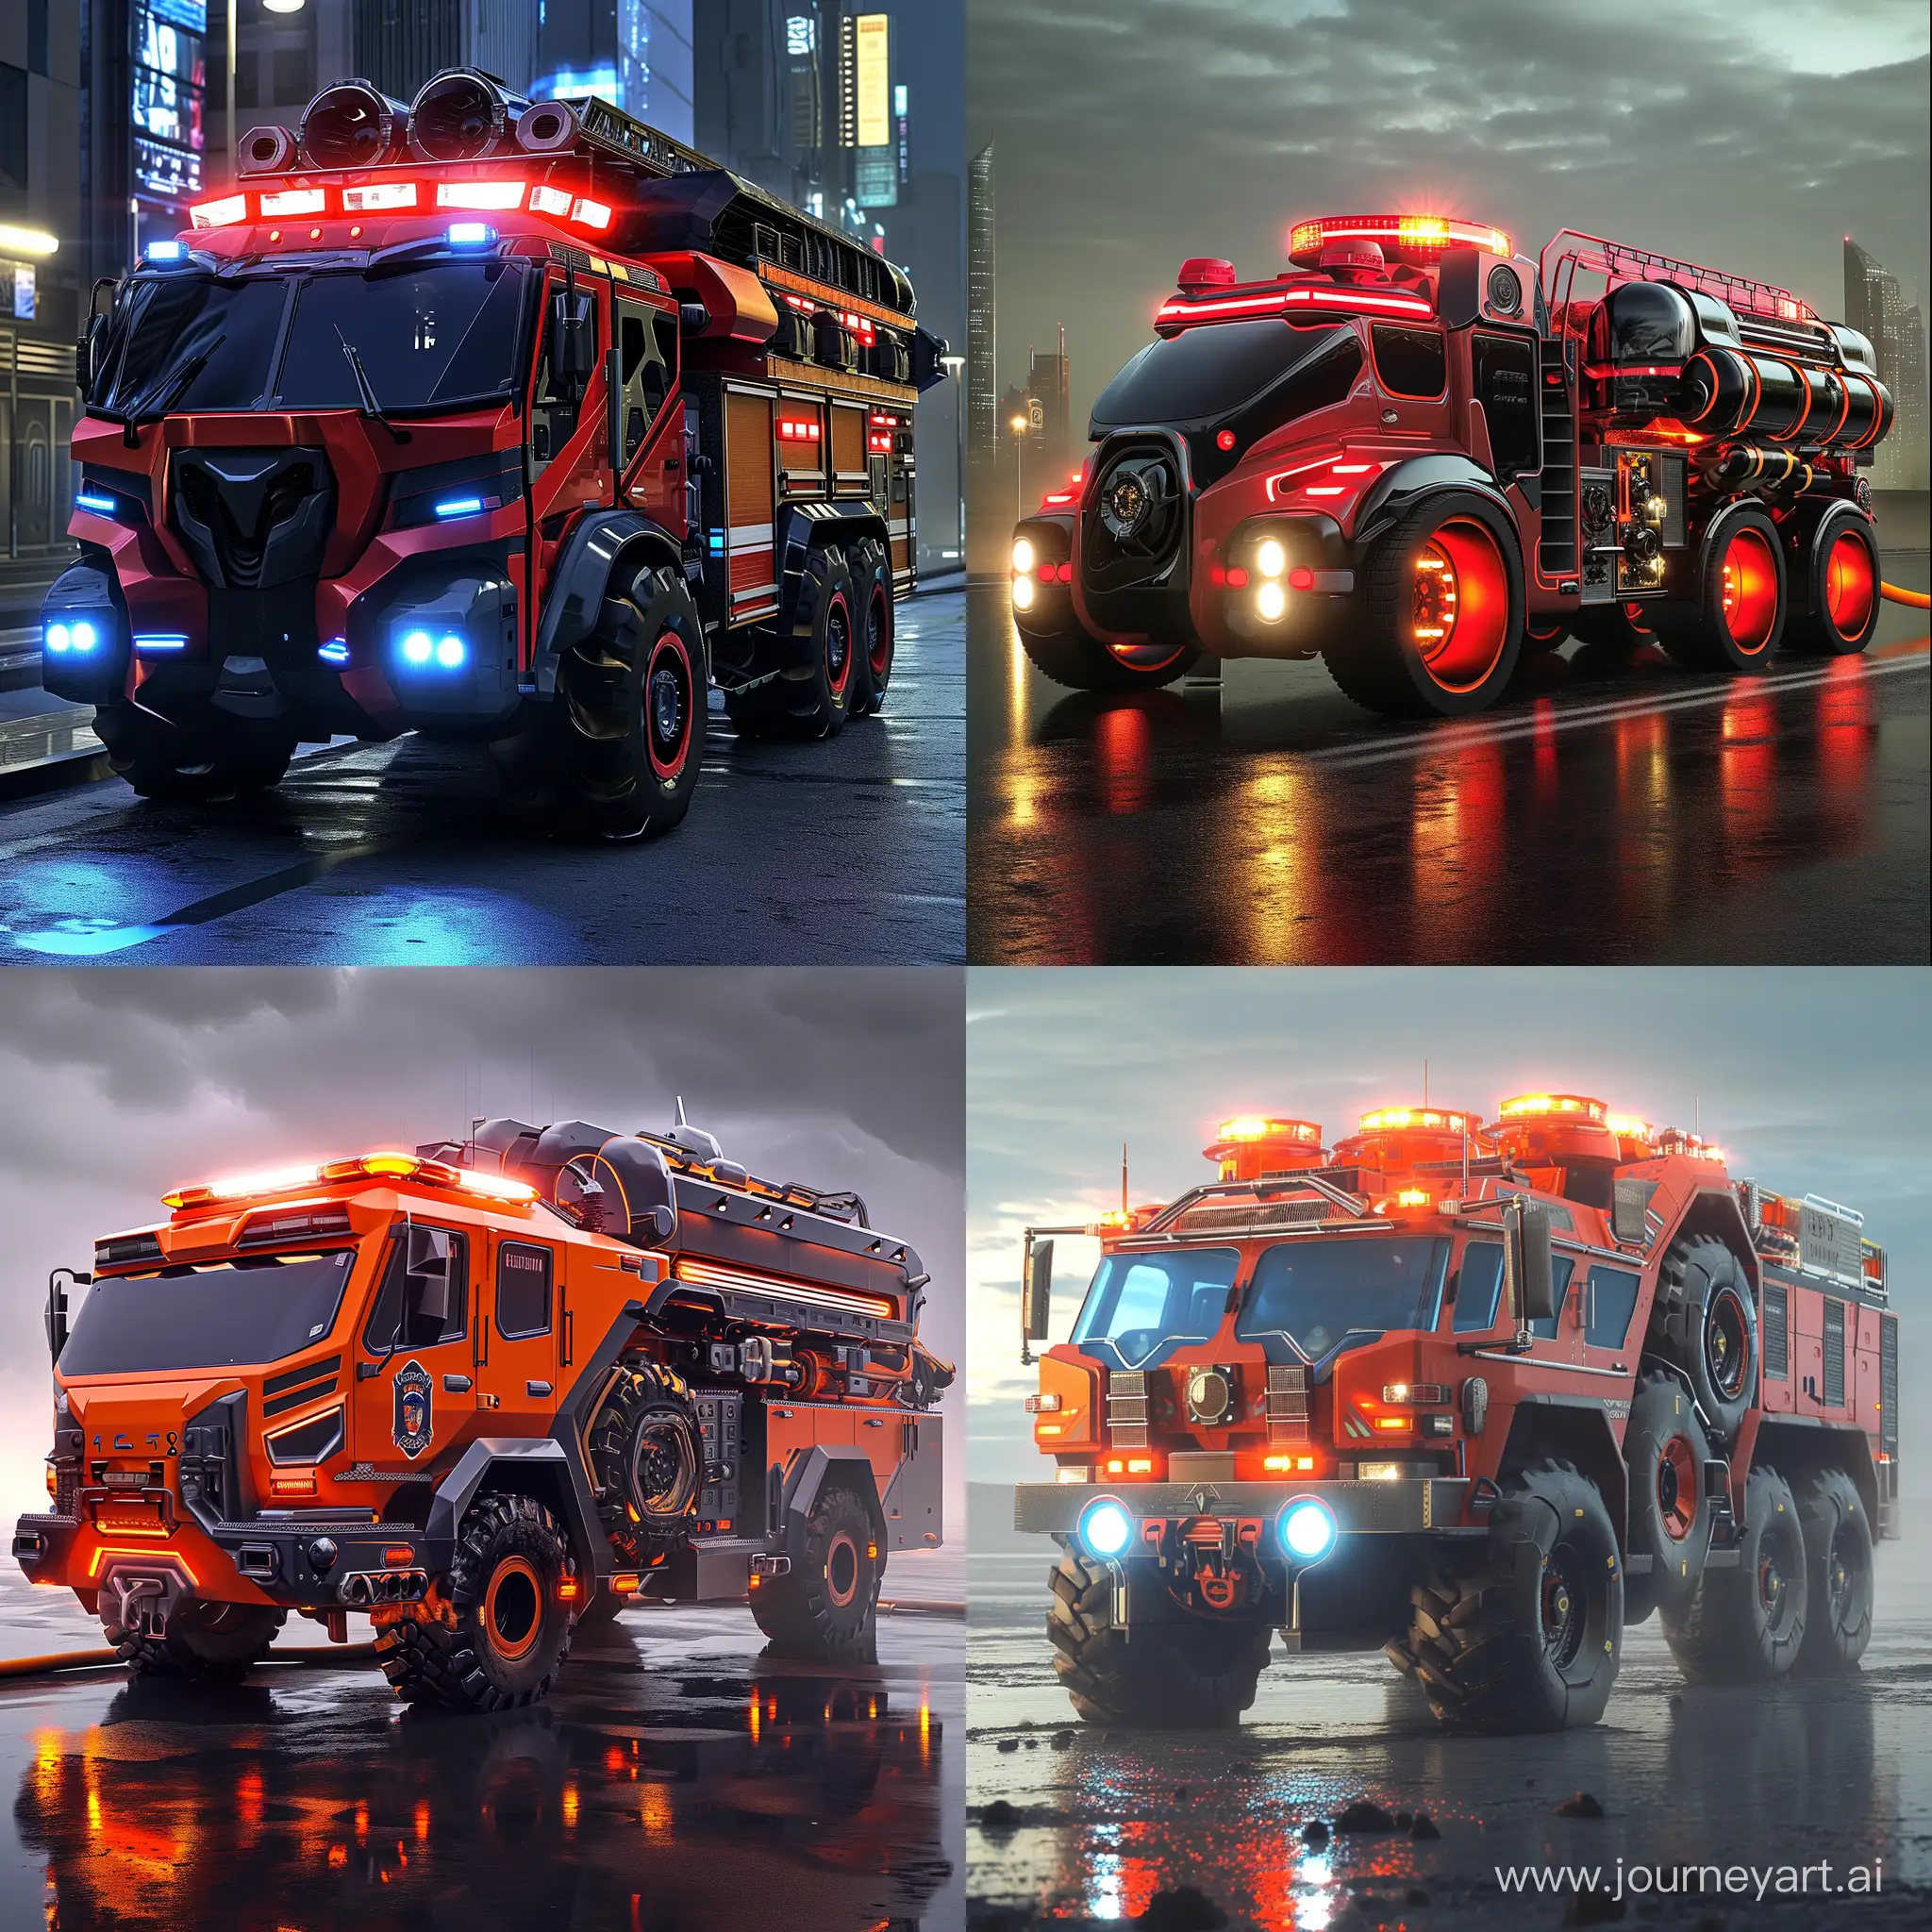 Futuristic fire truck, impact-resistant materials, artstation, DeviantArt, science fiction  --v 6